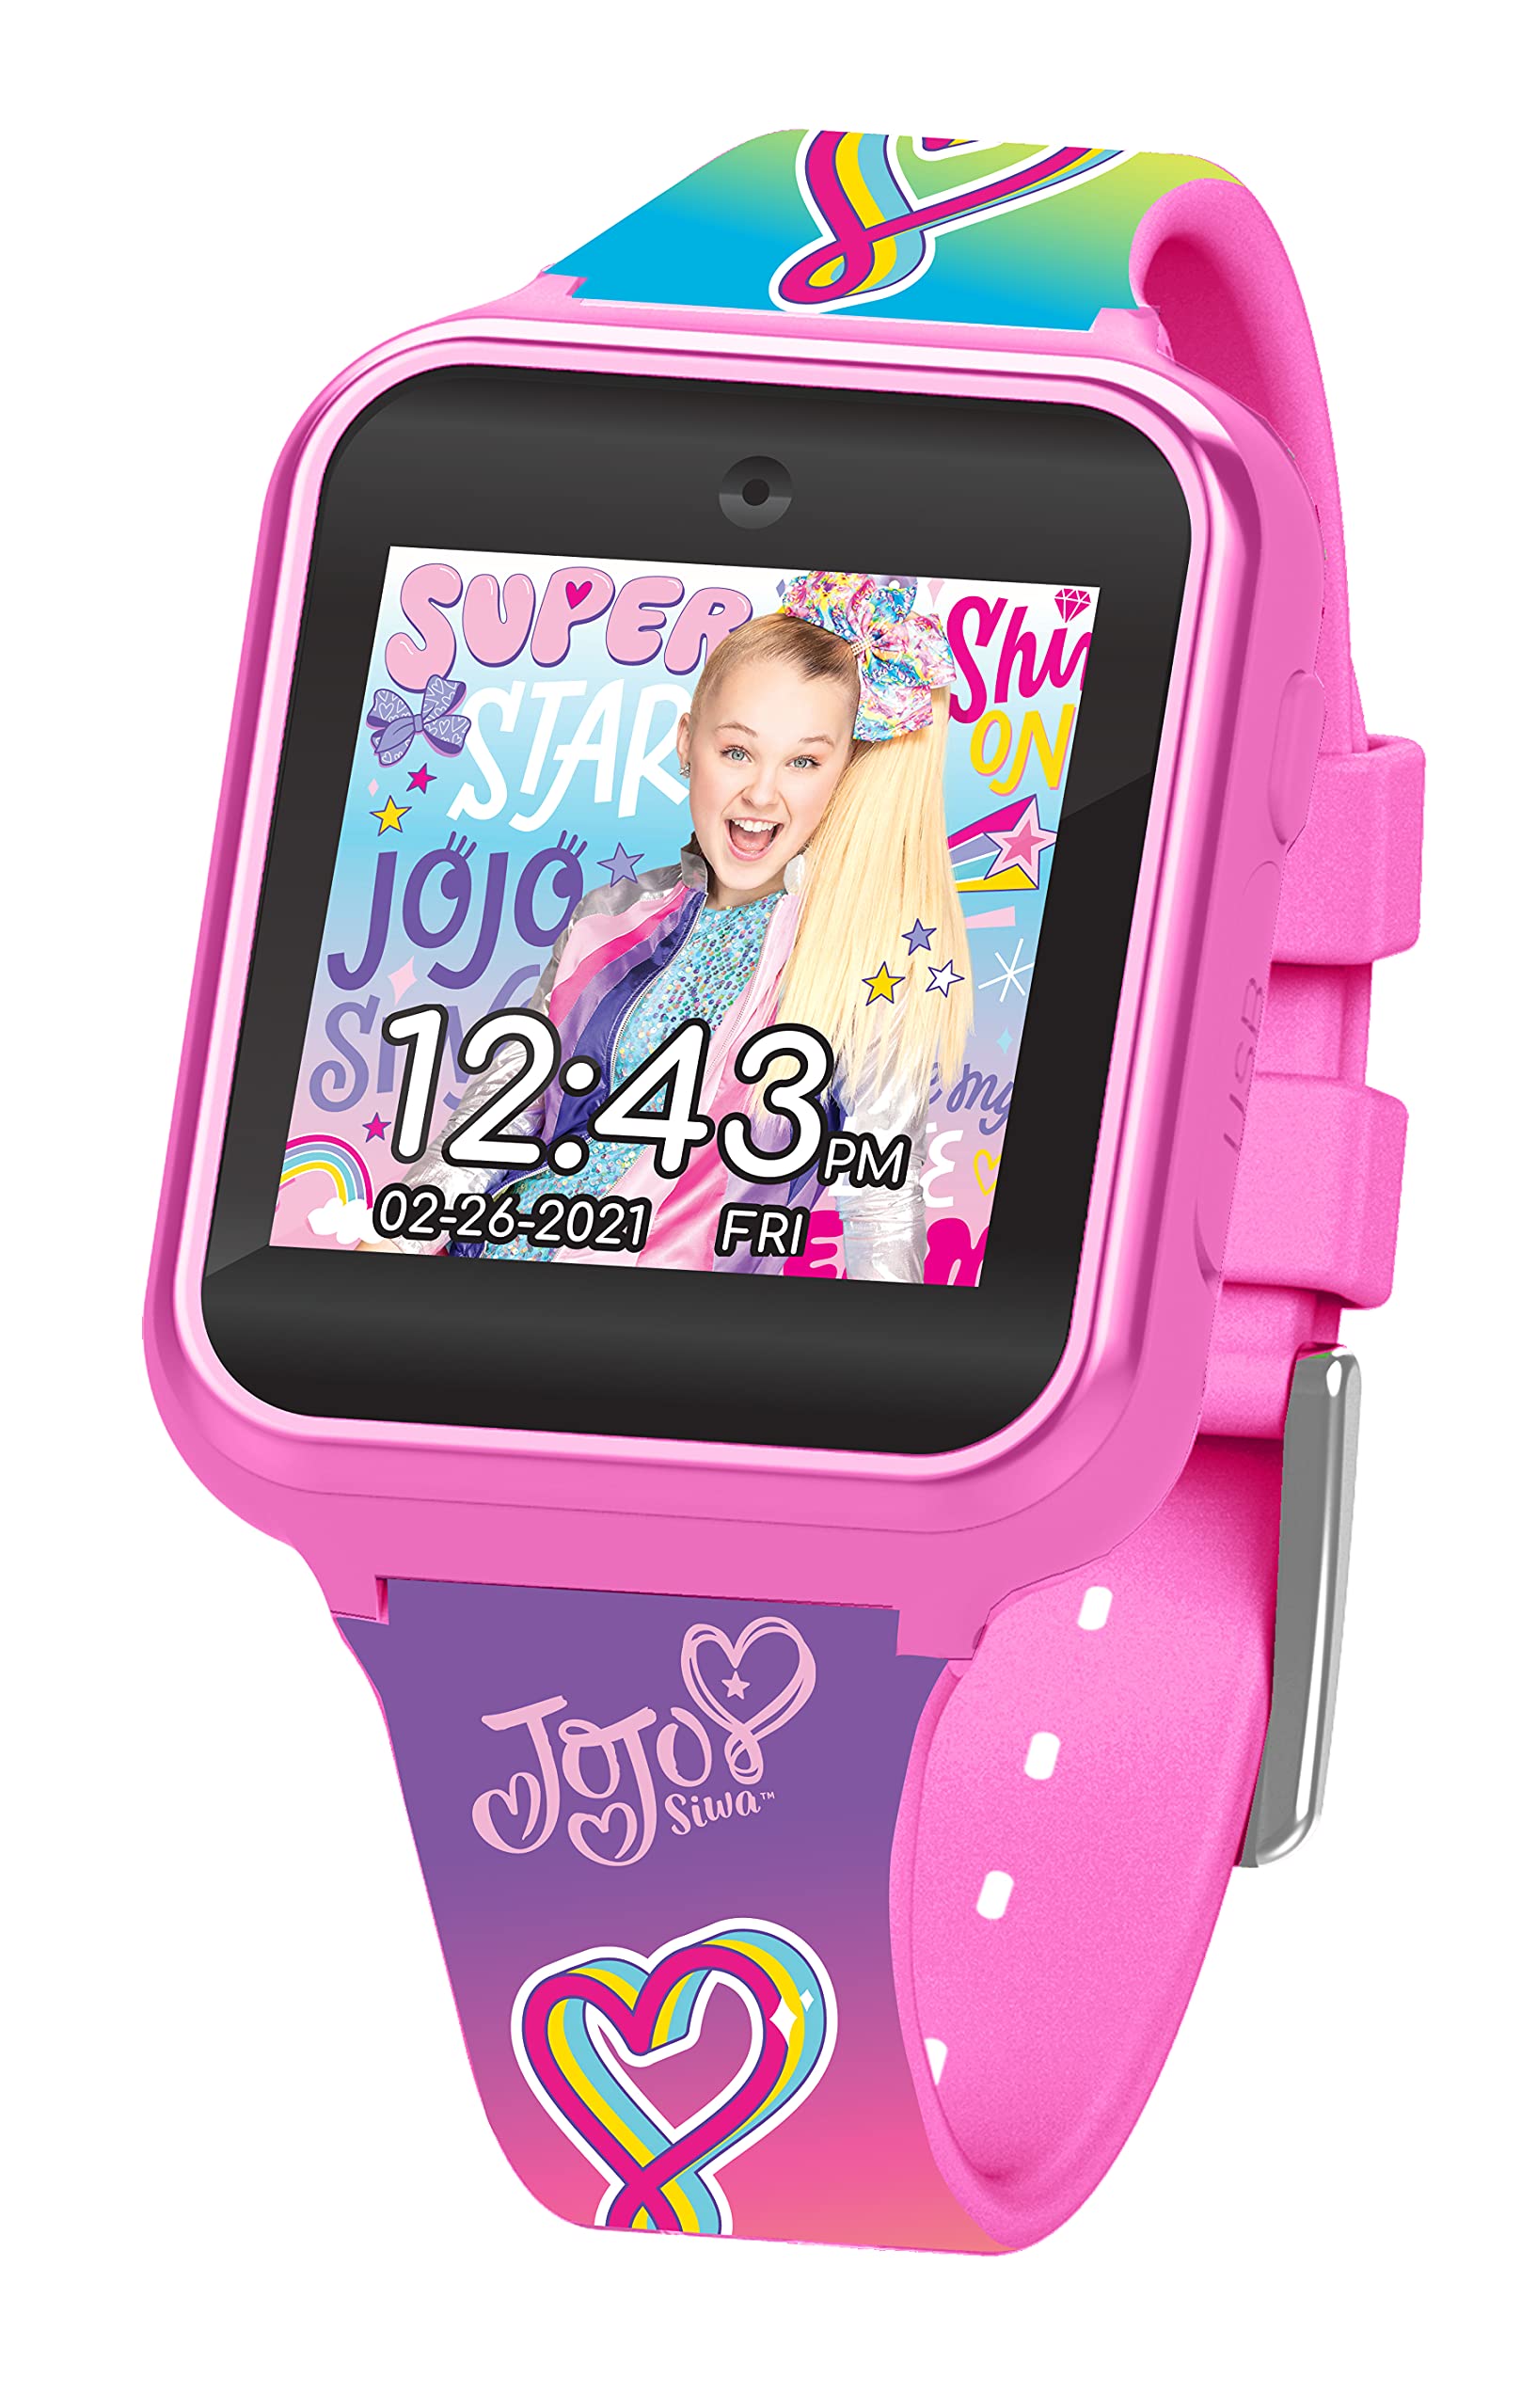 Accutime Kids Nickelodeon JoJo Siwa Educational Learning Touchscreen Smart Watch Toy for Girls, Boys, Toddlers - Selfie Cam, Learning Games, Alarm, Calculator, Pedometer & More (Model: JOJ4383AZ)